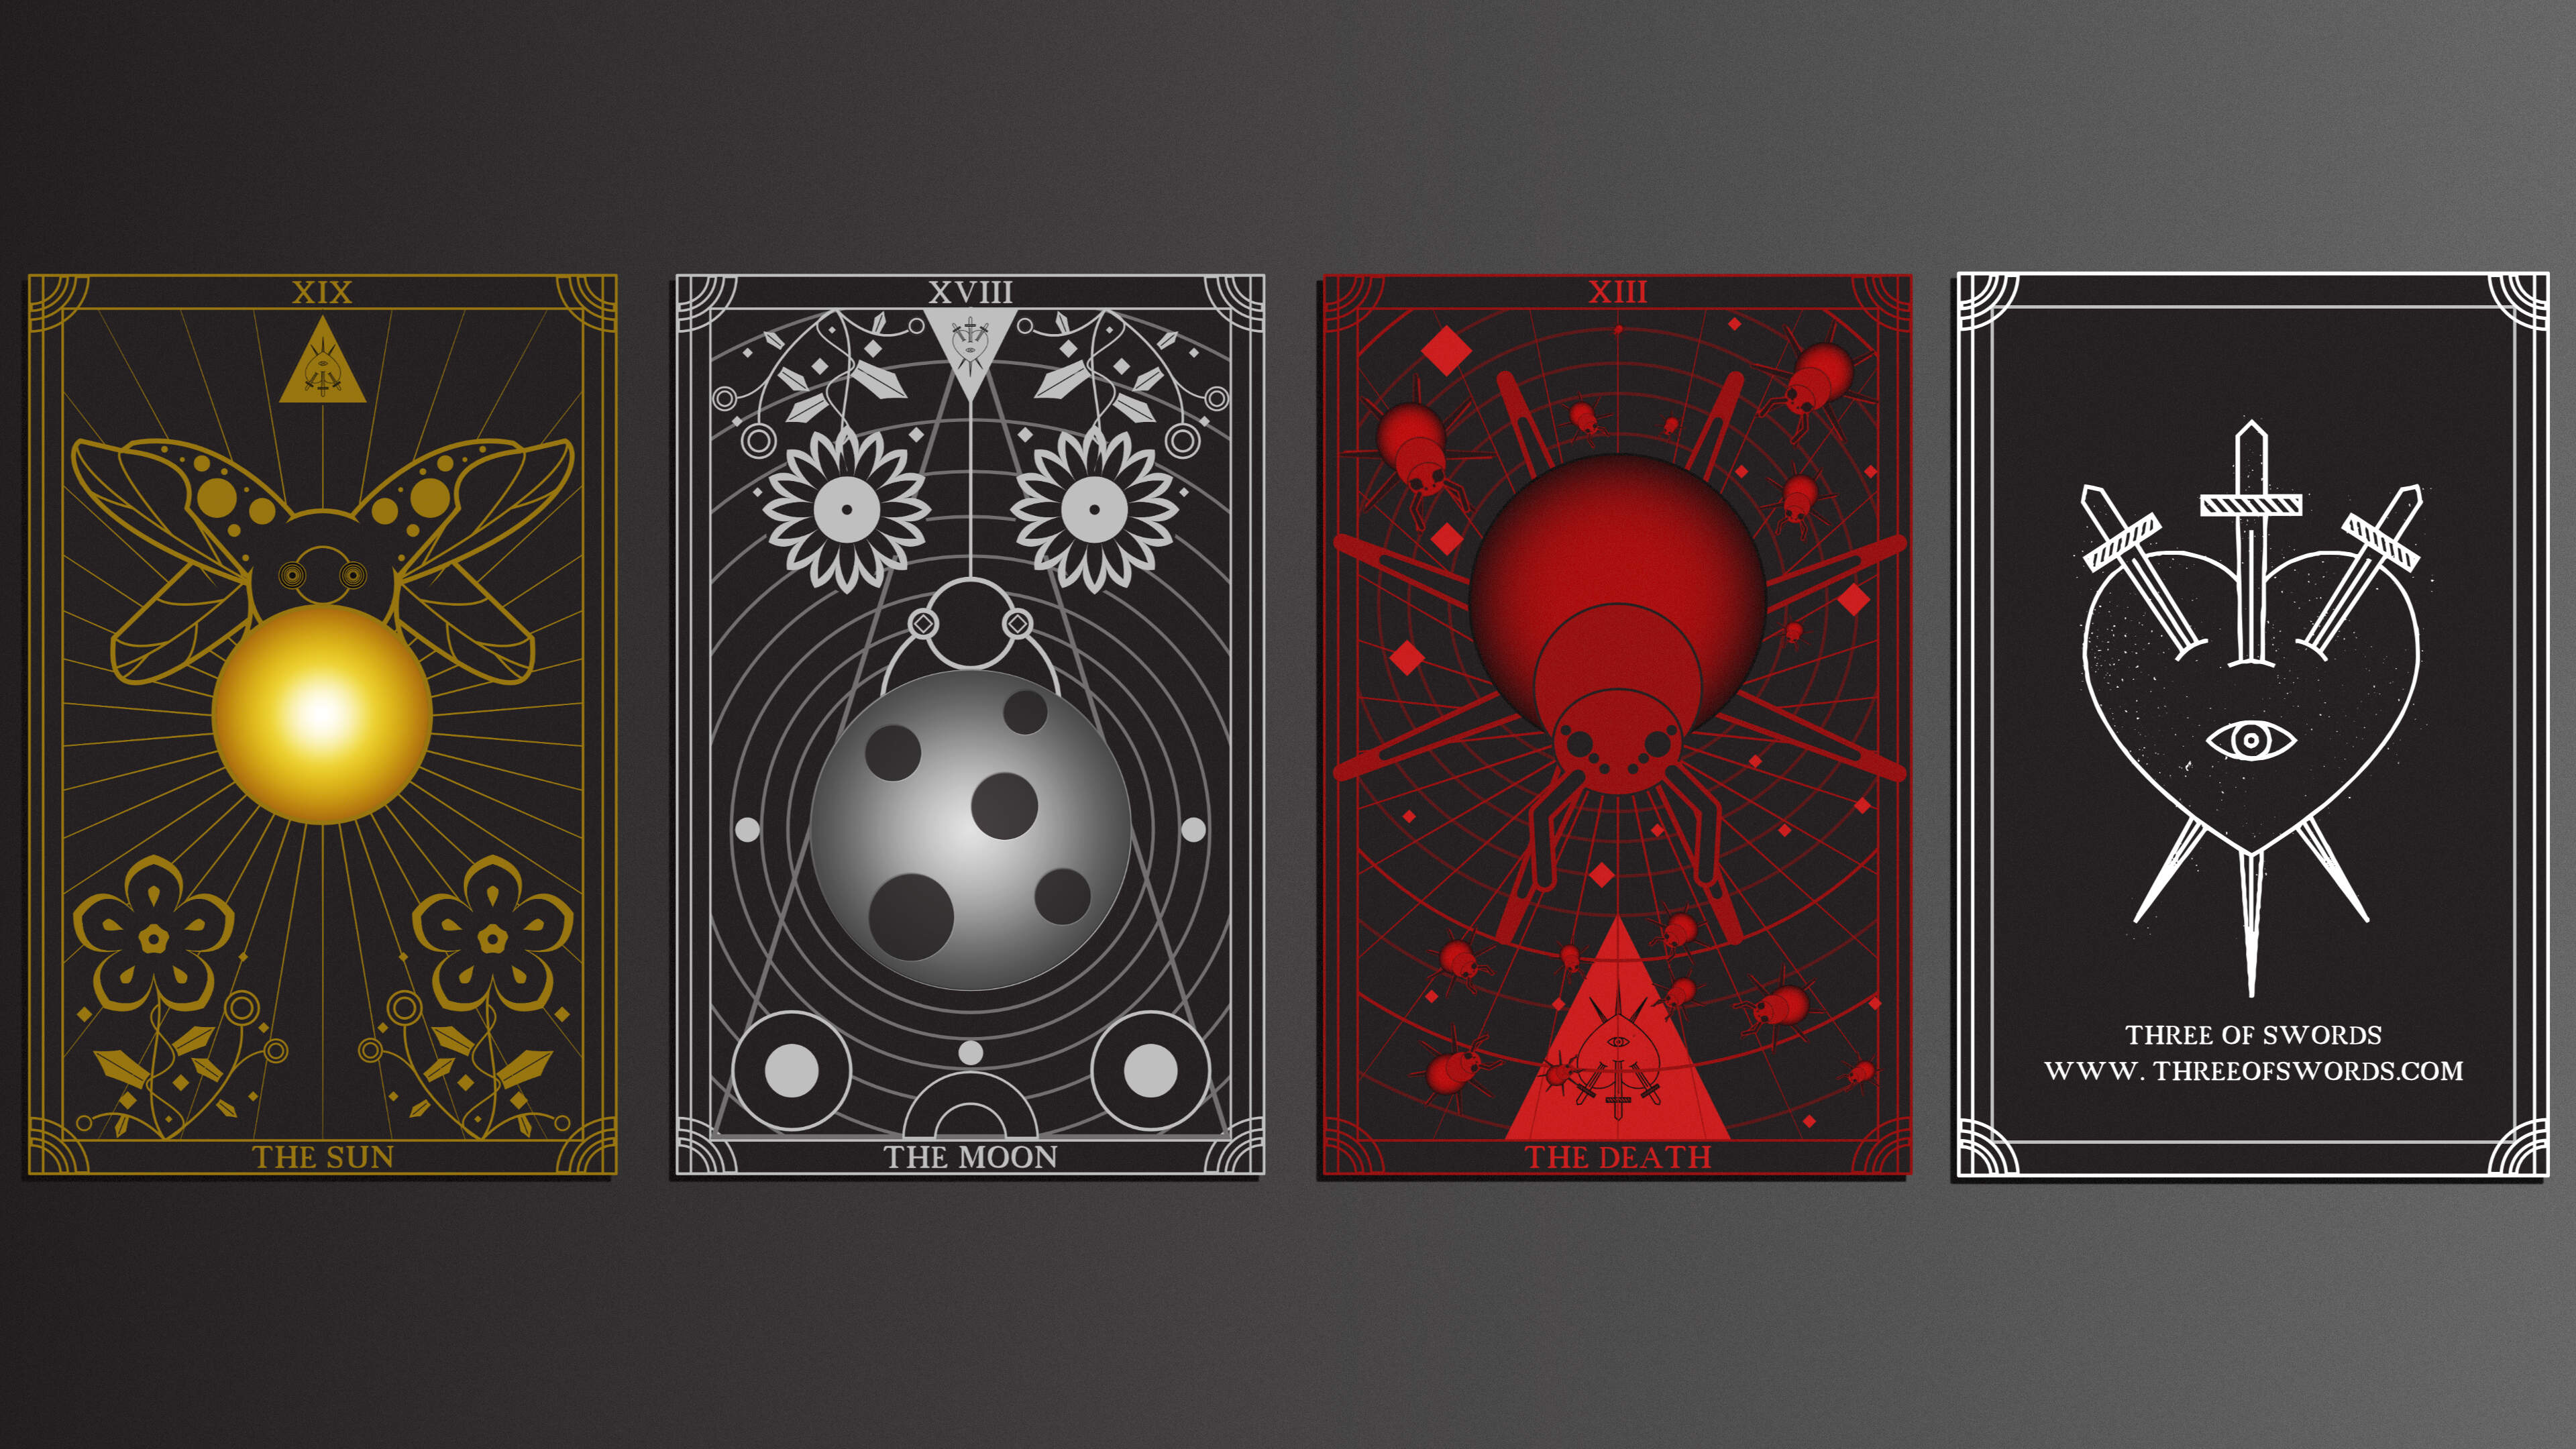 Three of swords - Tarot cards